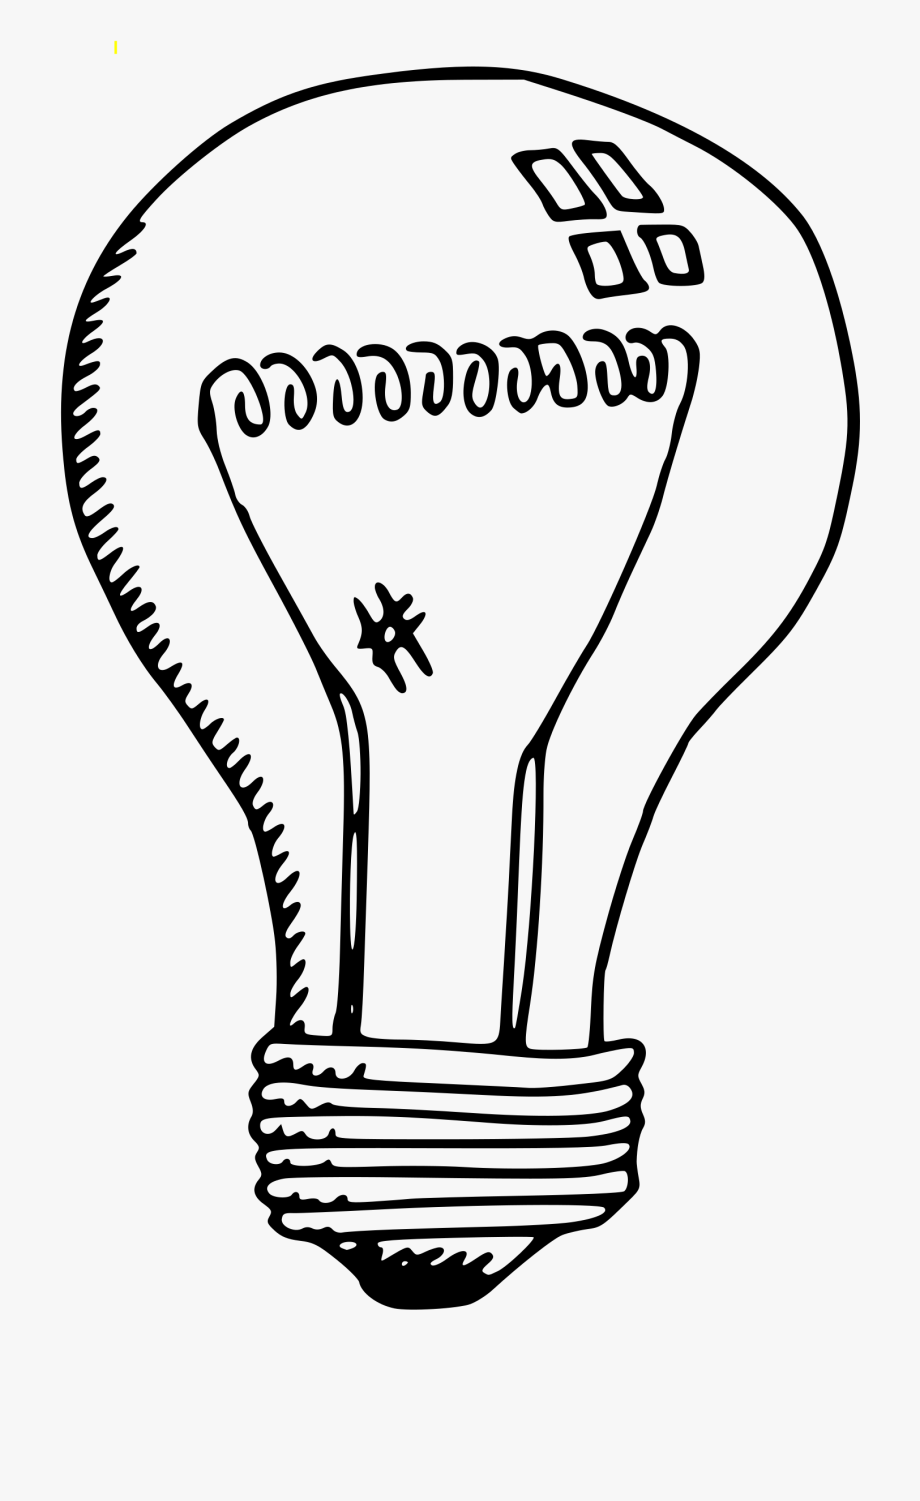 Drawn light bulb.